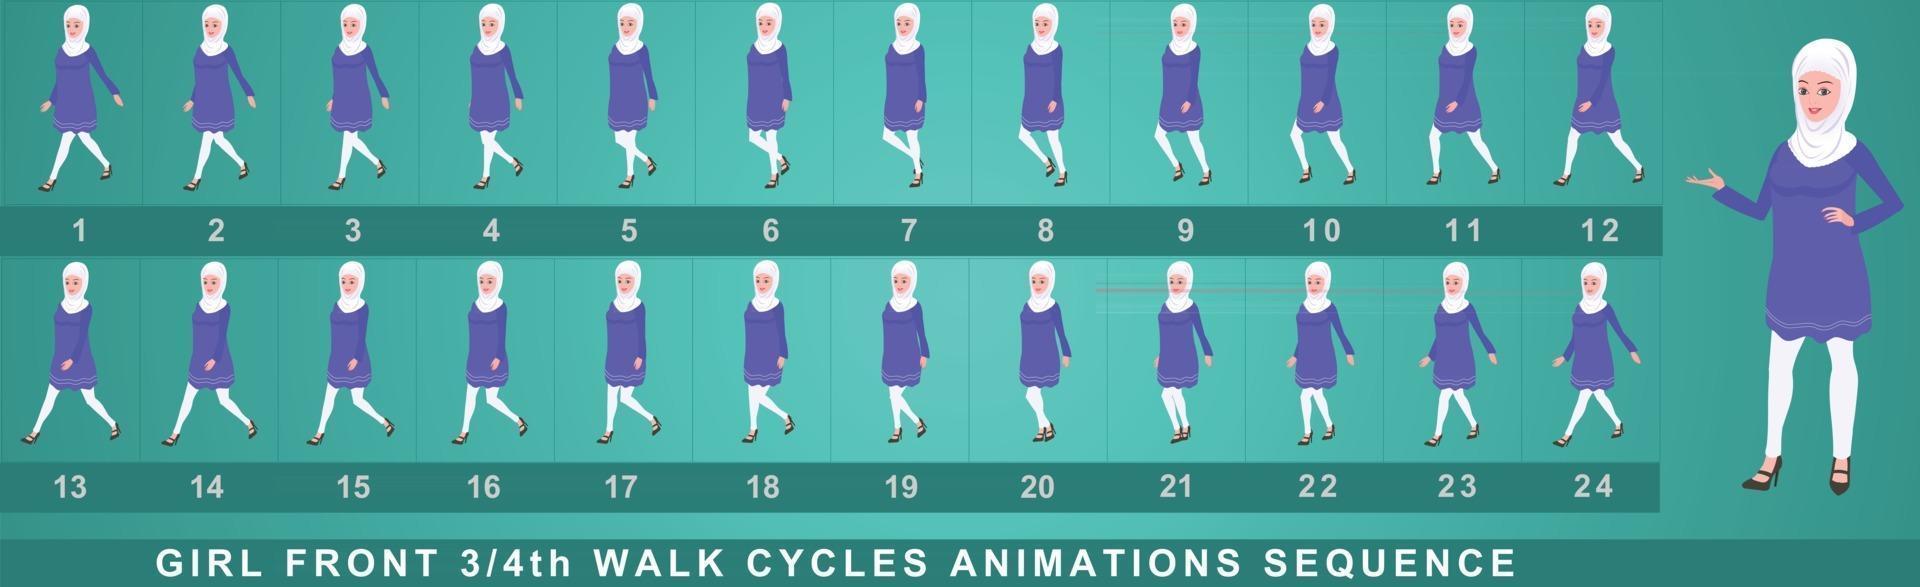 Mädchen Charakter Walk Cycle Animationssequenz vektor